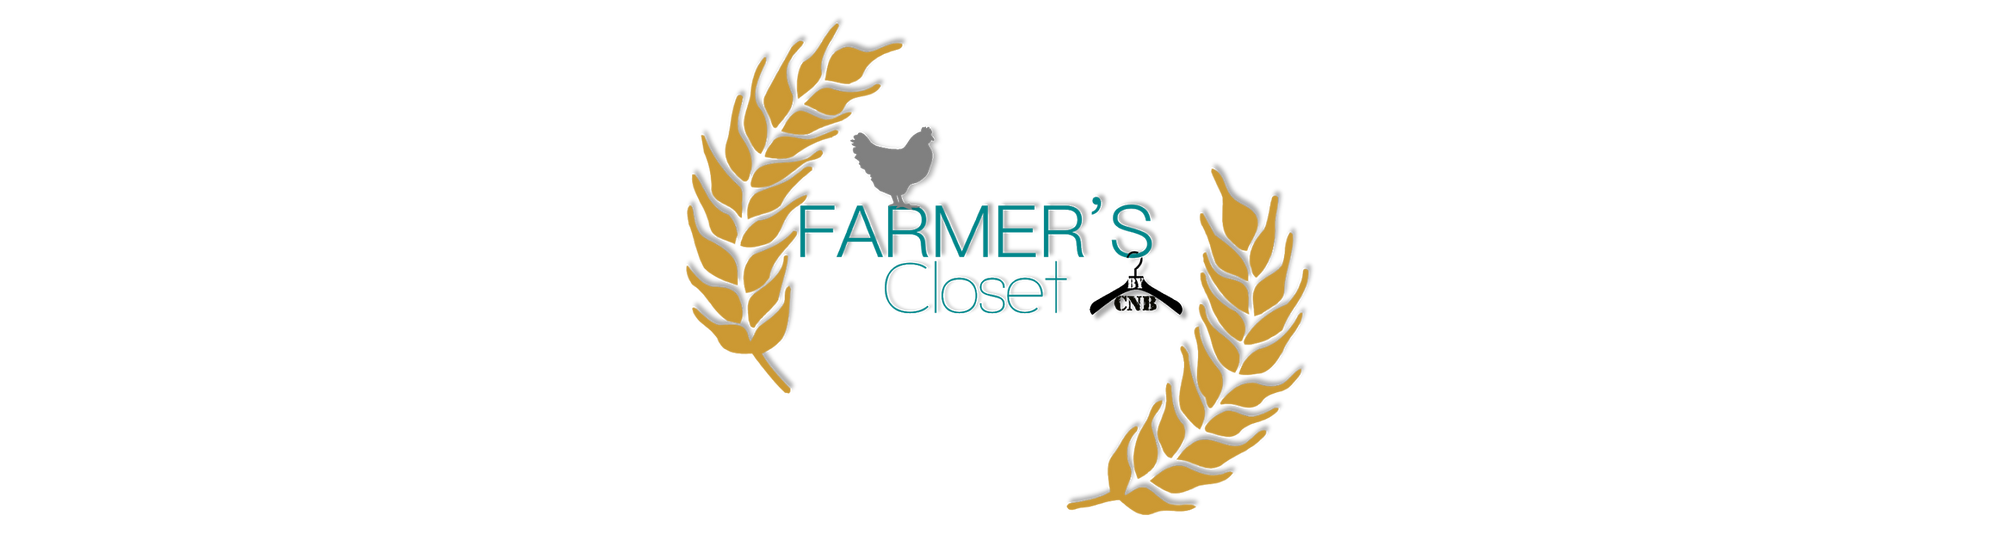 Farmer's Closet by CNB